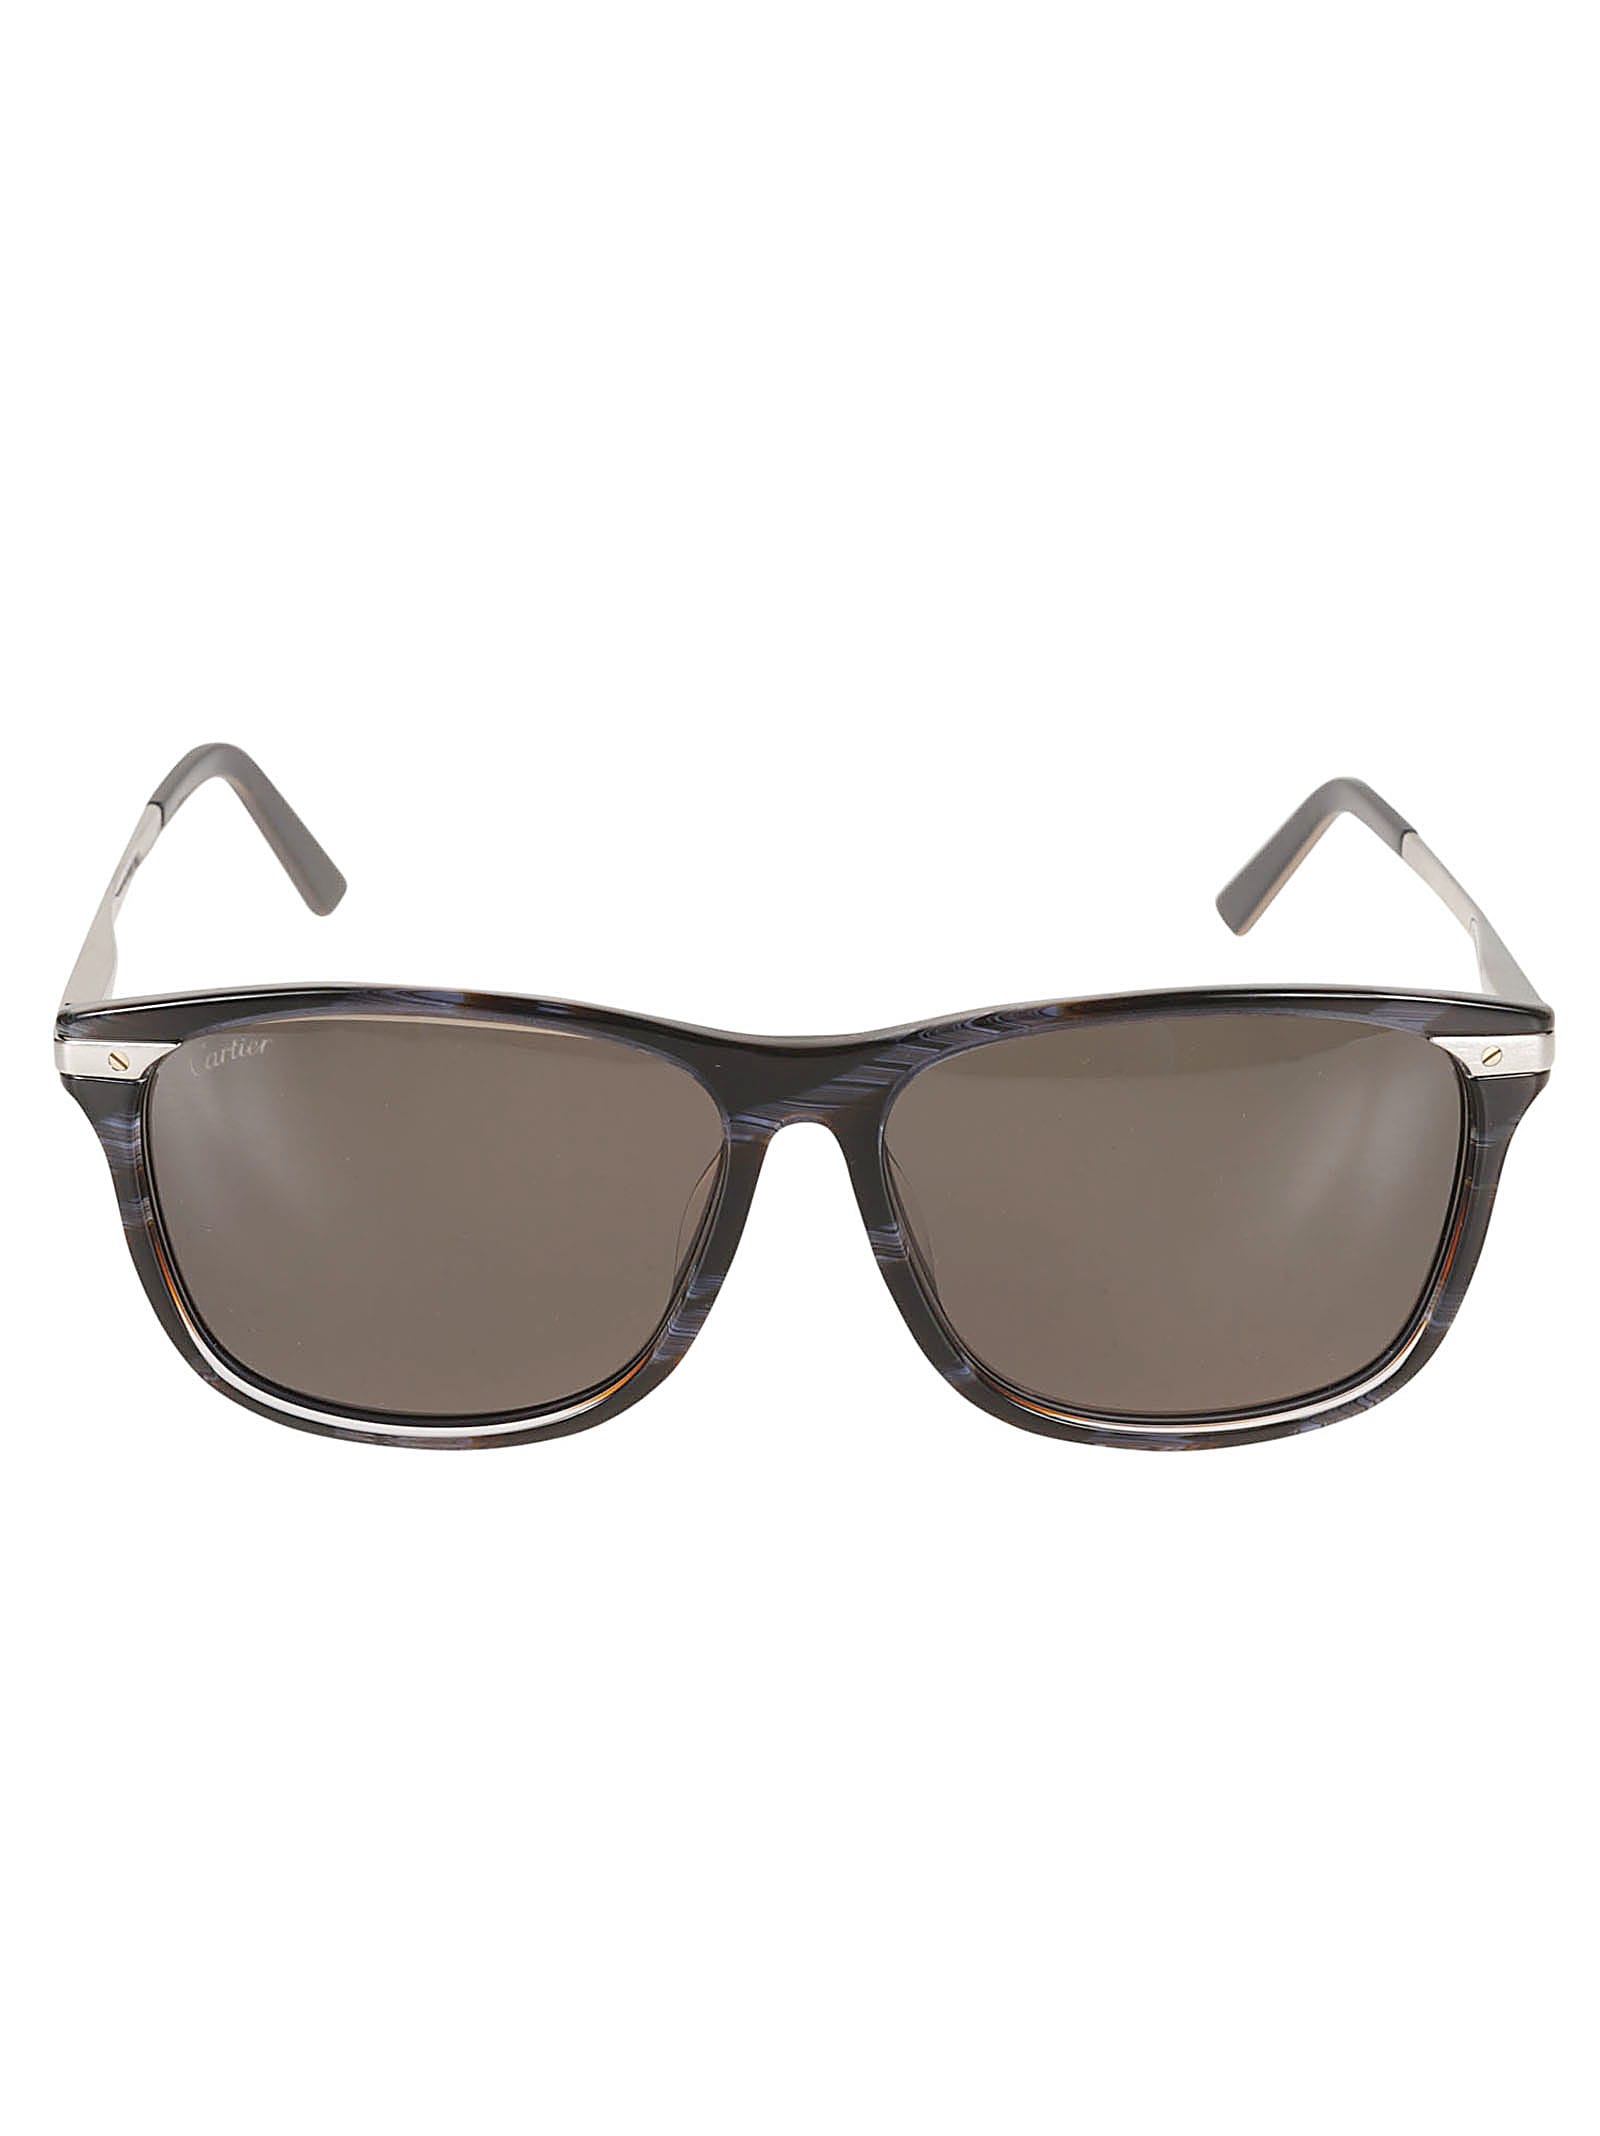 Cartier Eyewear Wayfarer Classic Sunglasses